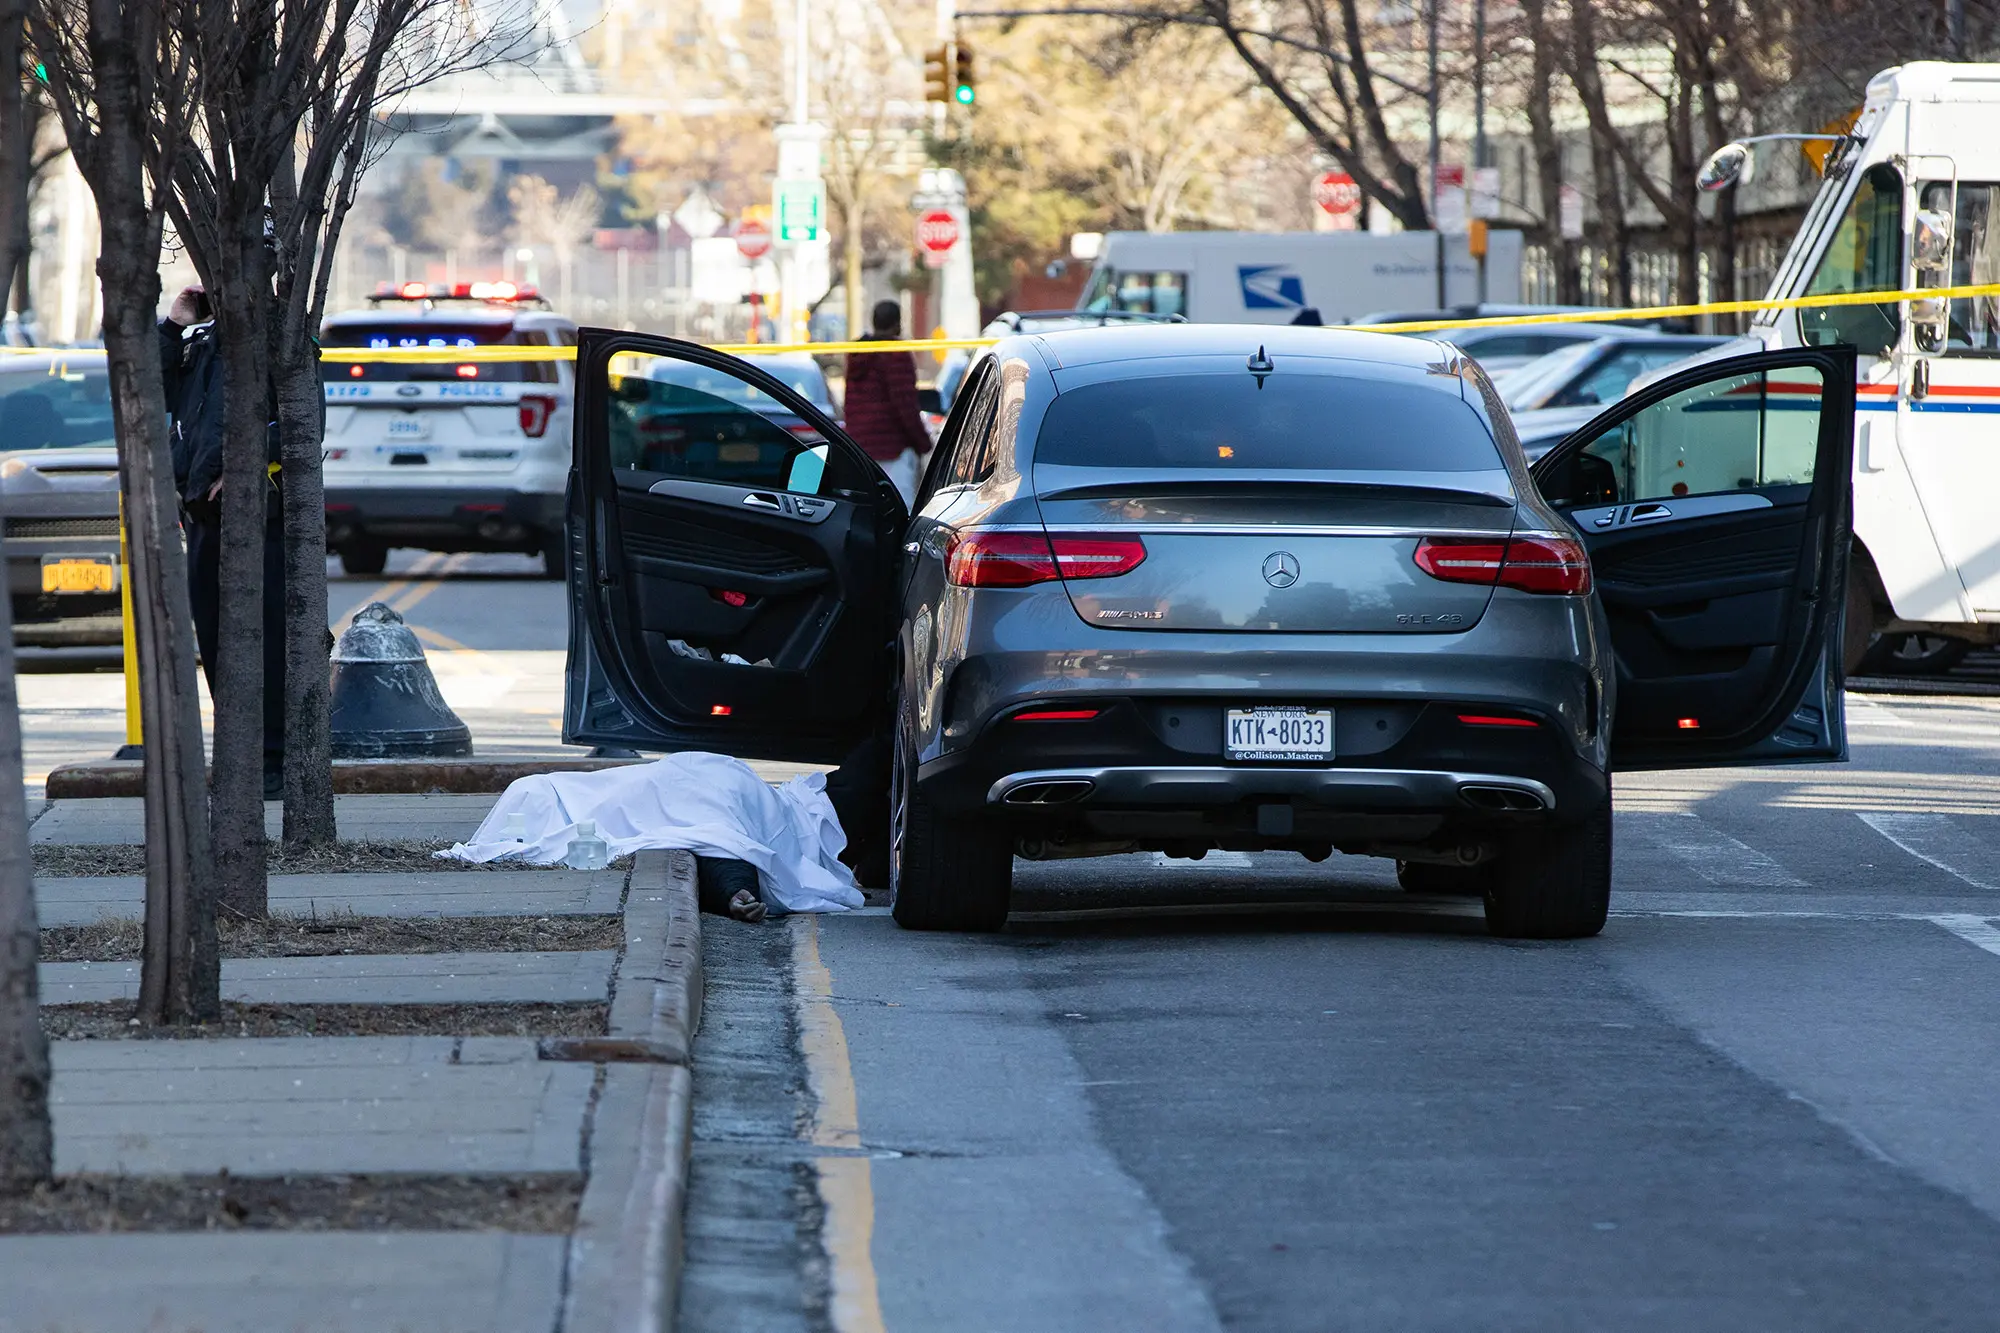 Tragic Series of Shootings Rocks Harlem: Man Shot on Bench, Two Women Fatally Gunned Down